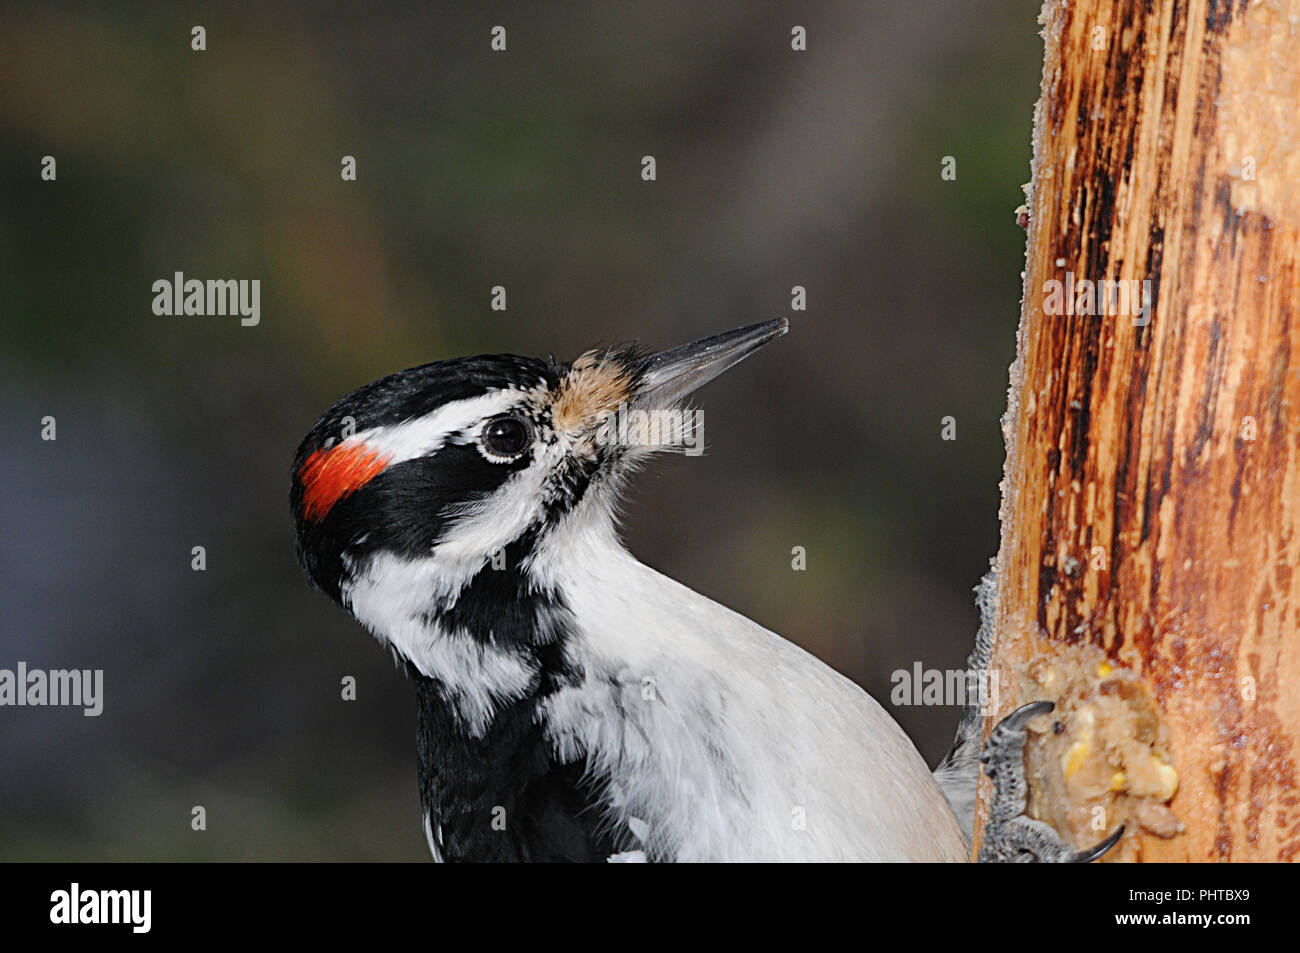 Woodpecker bird enjoying its environment. Stock Photo